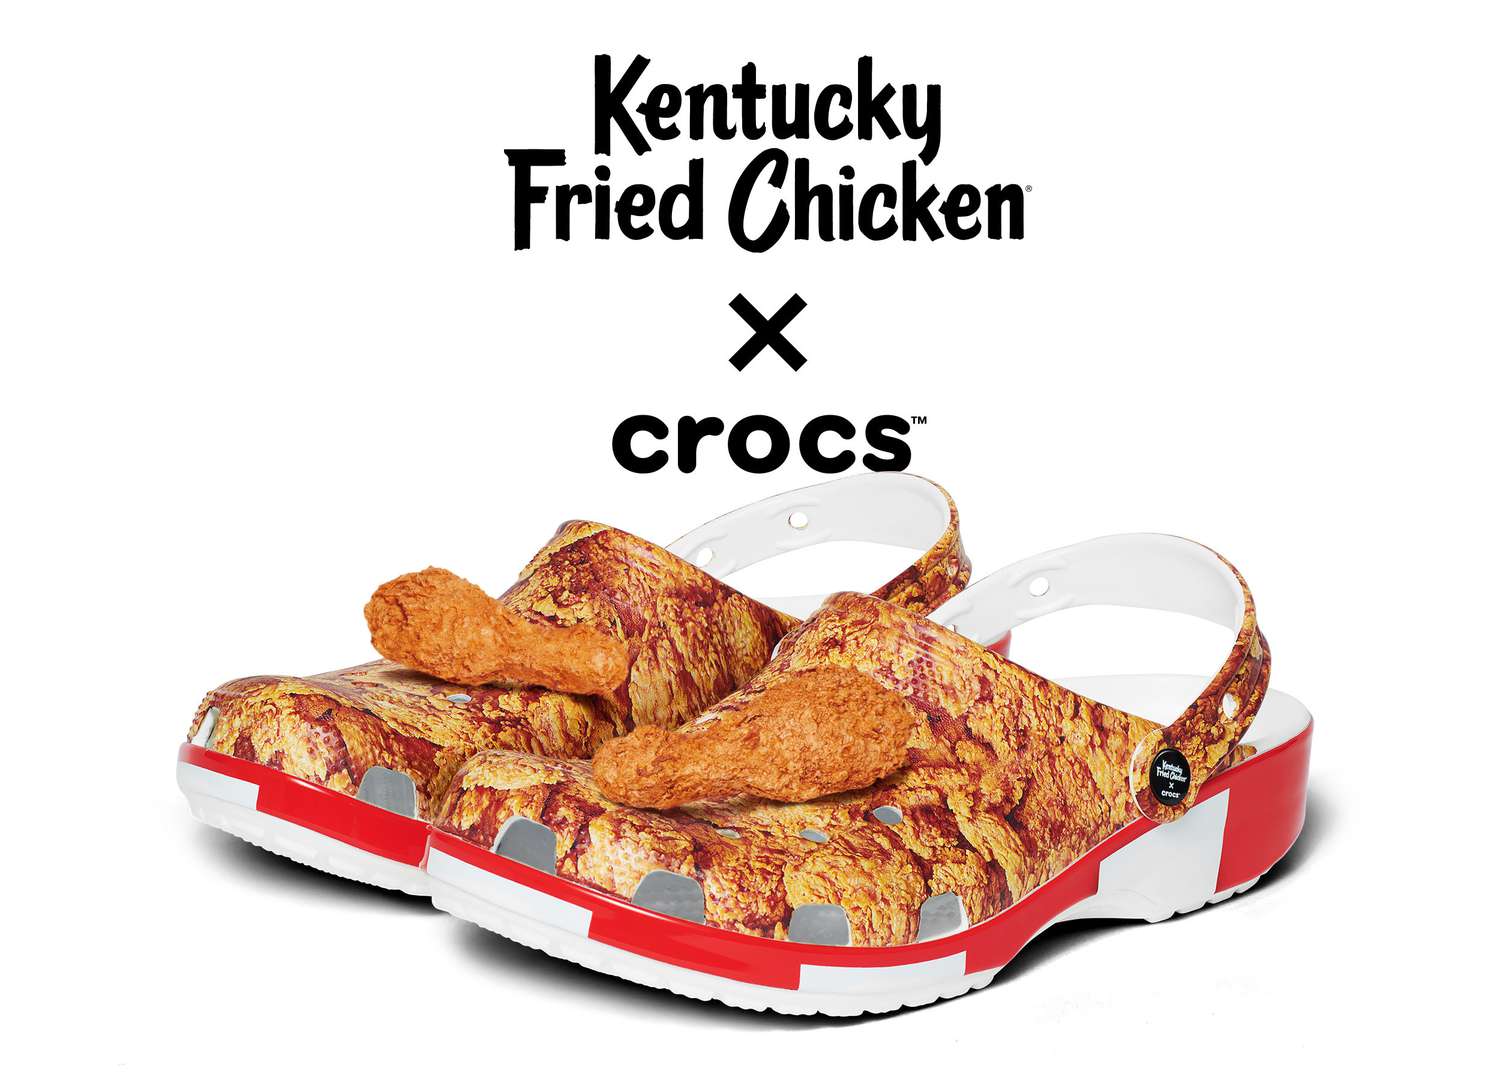 Fried Chicken X Crocs